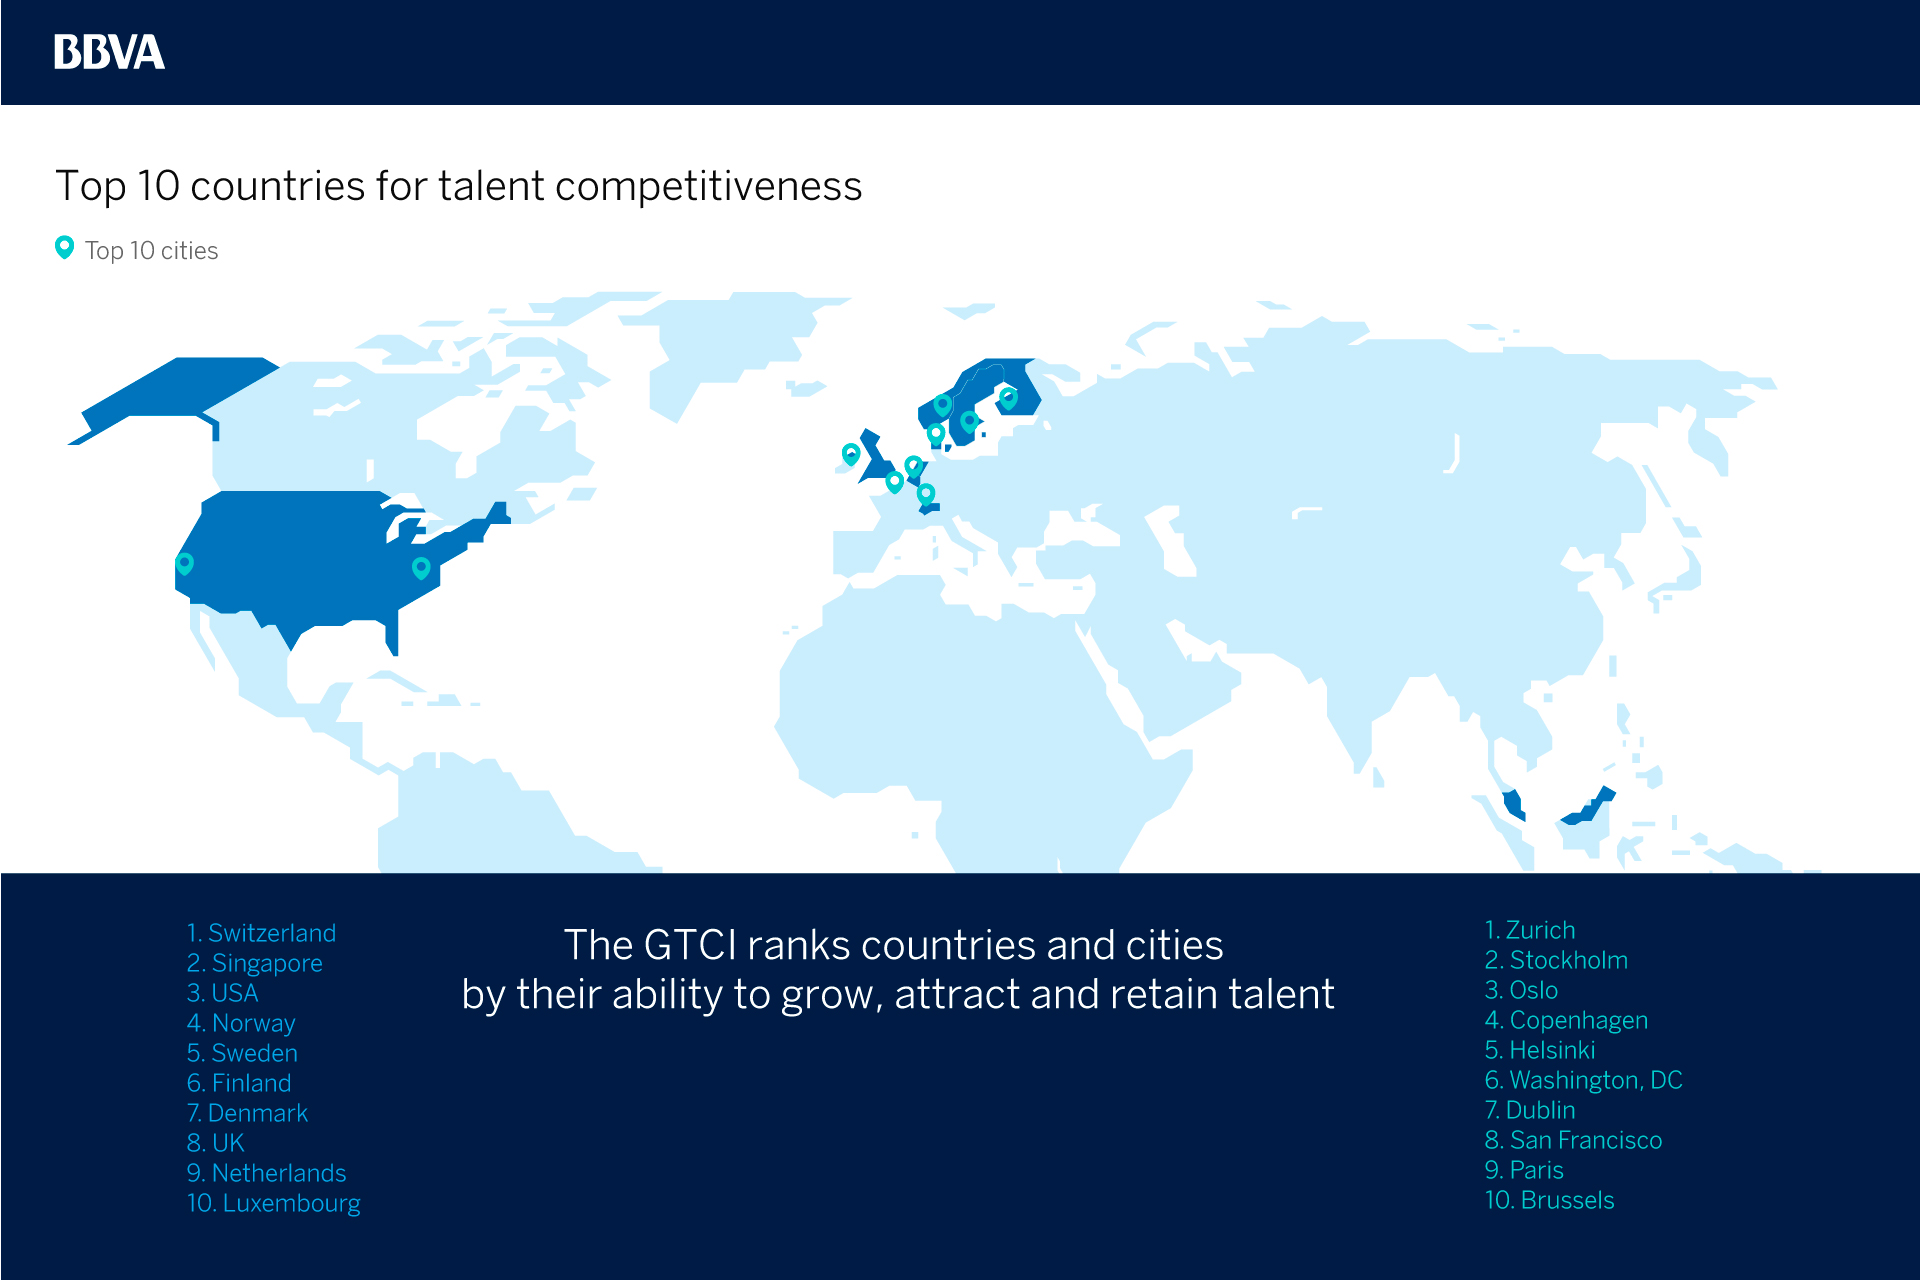 Competitiveness - BBVA - Switzerland - talent